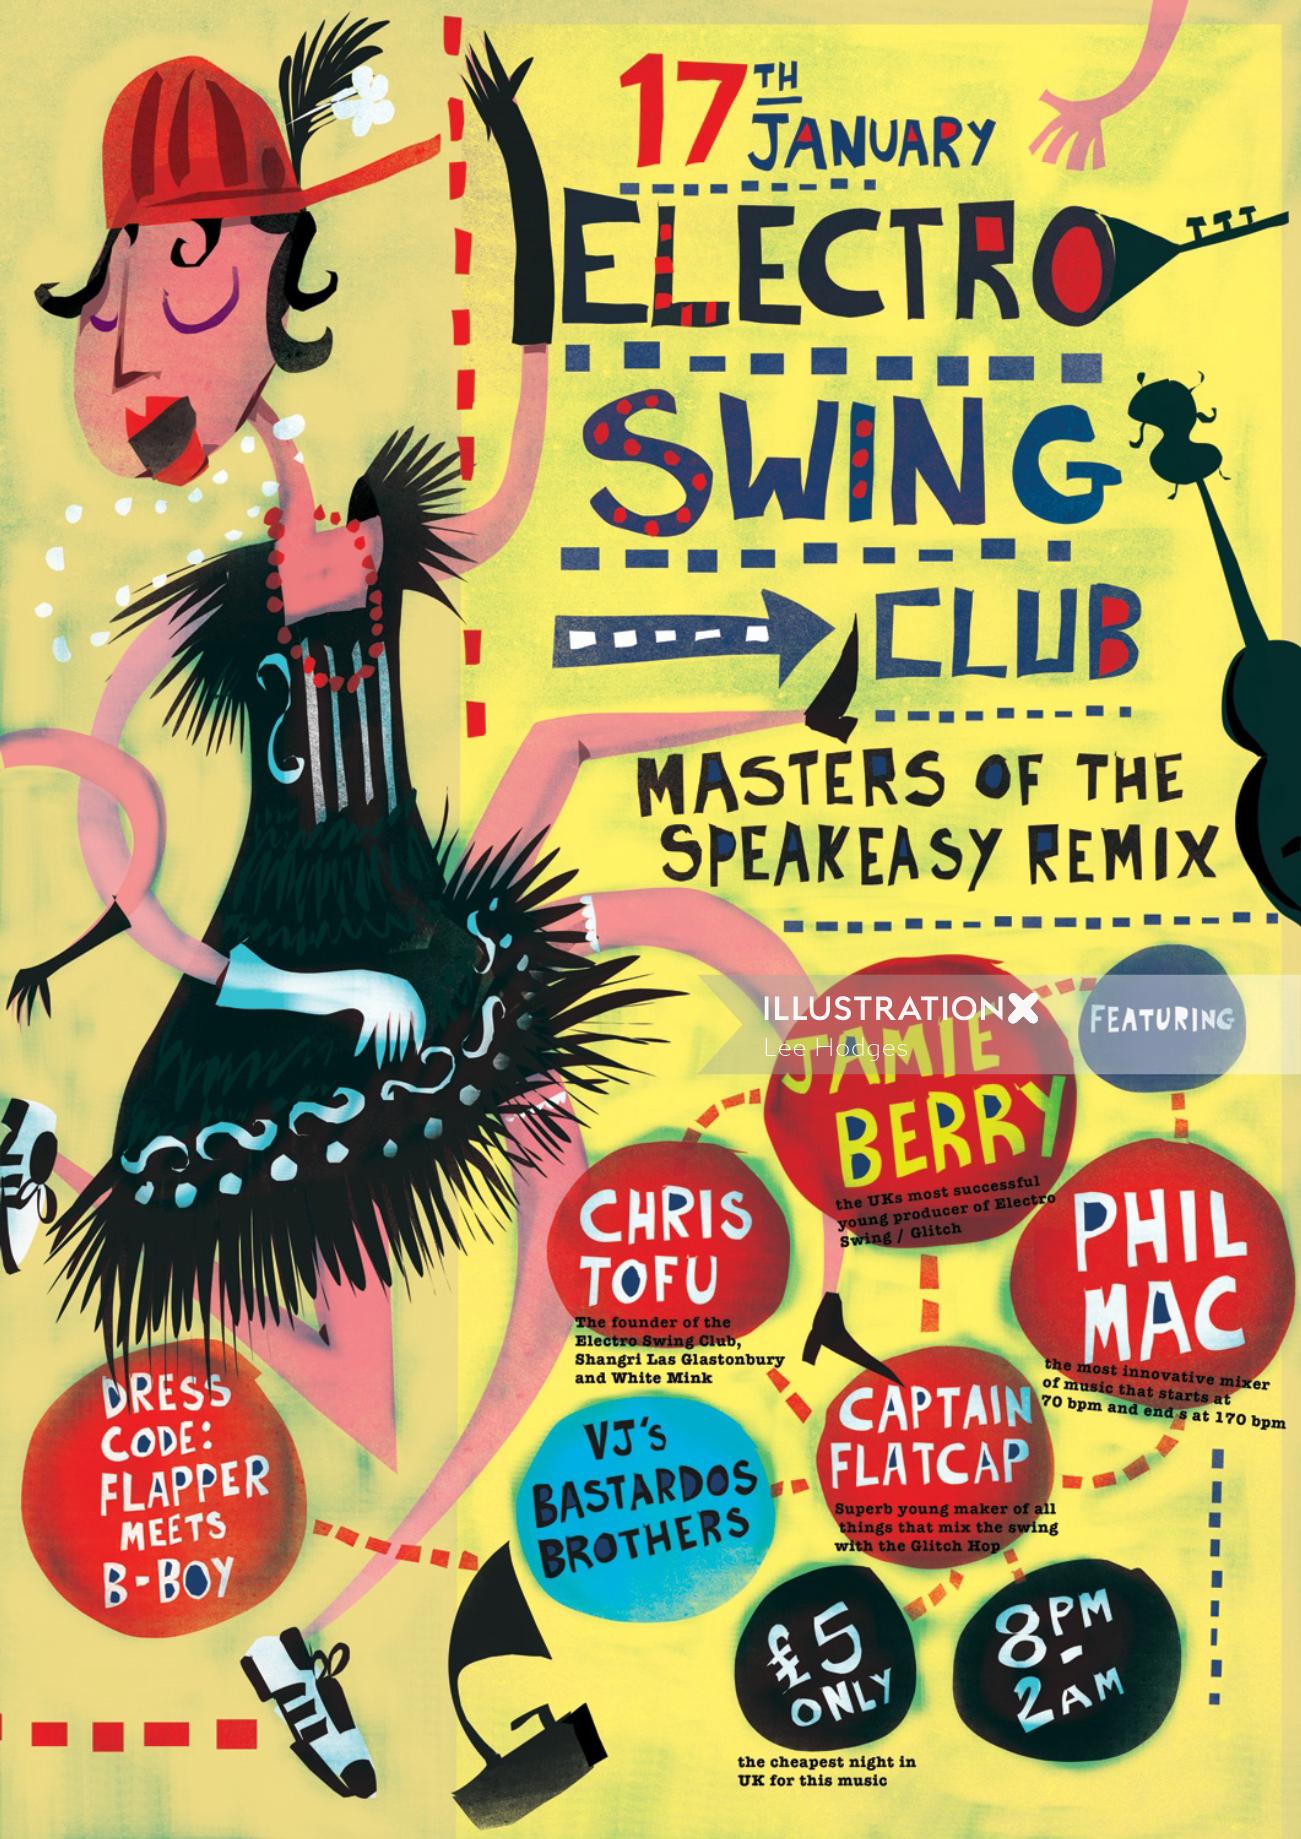 Electro Swing club poster
retro poster art